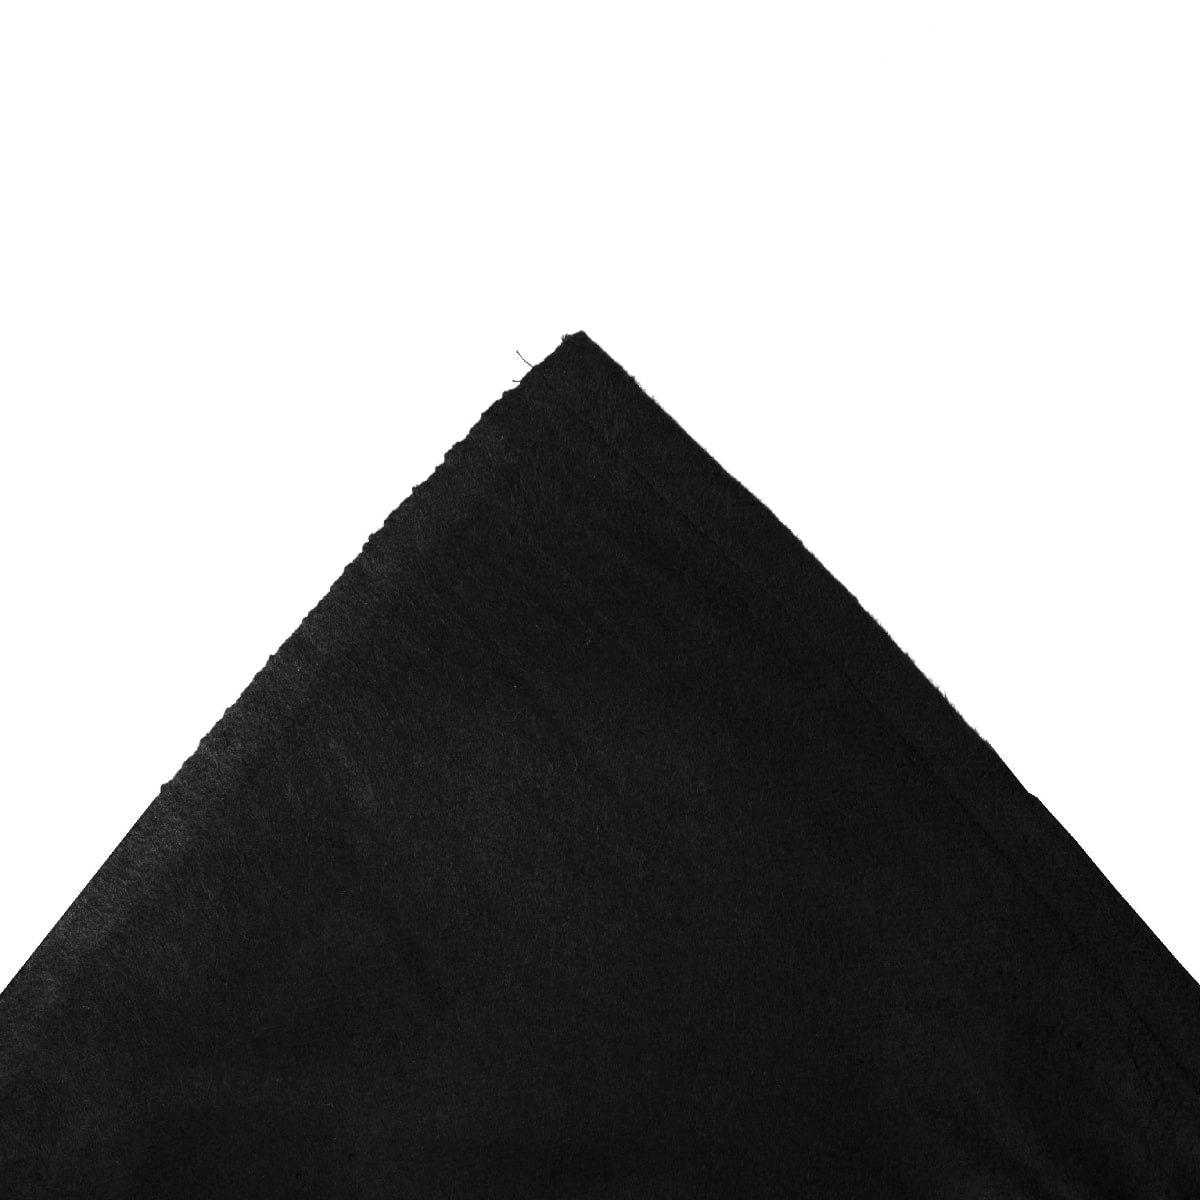  Black Material/Molton 300 x 900 cm / 10 x 30' (BACKGROUND)